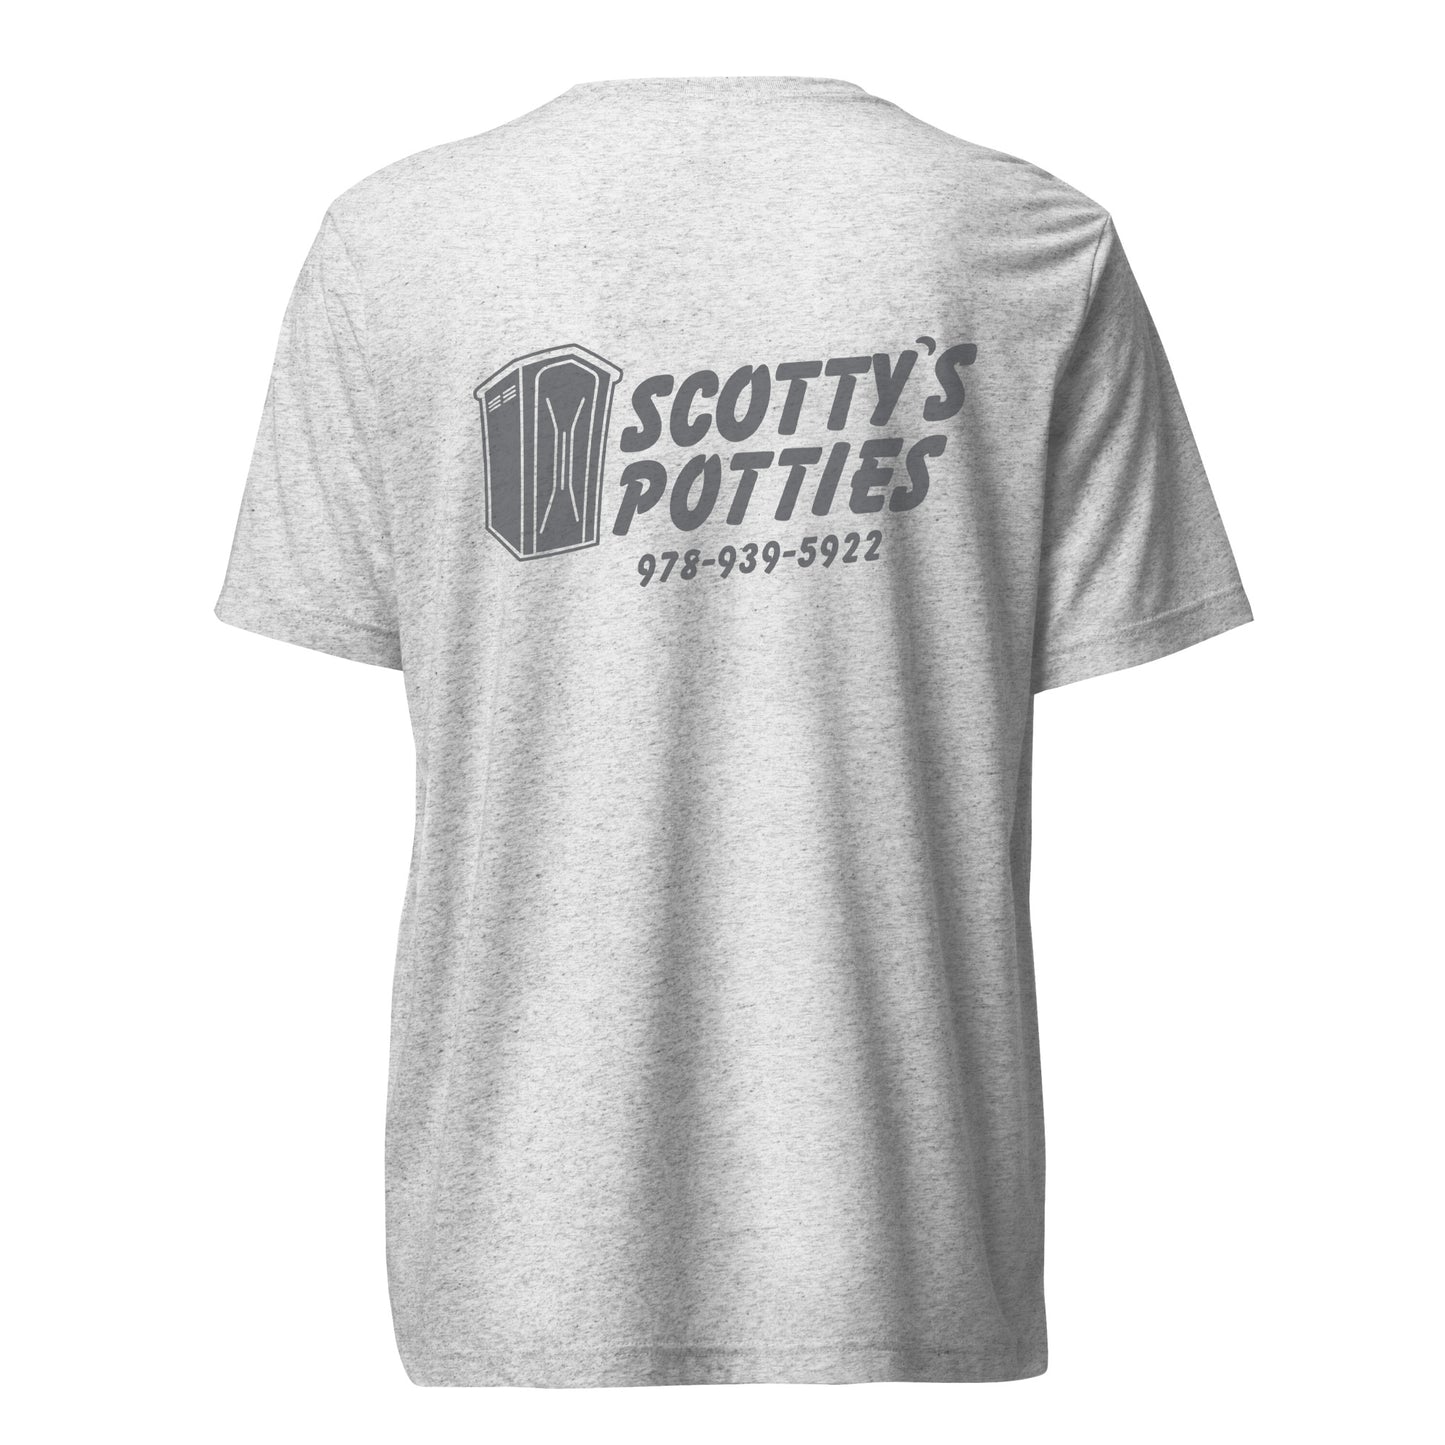 Scotty’s Potties Short sleeve t-shirt